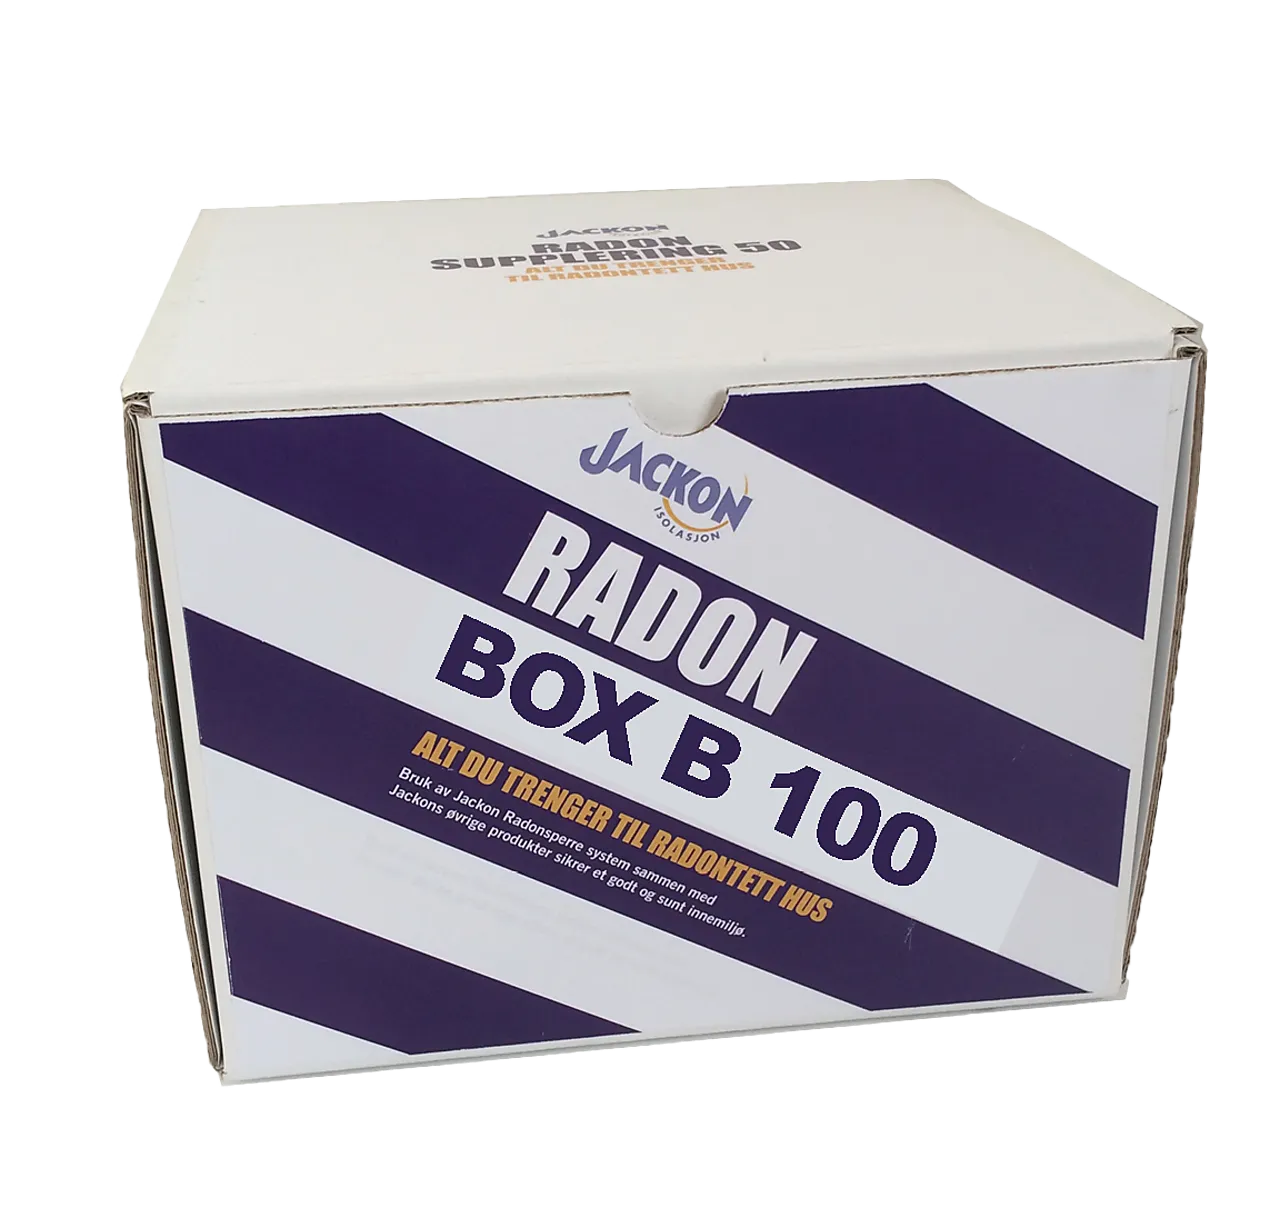 Jackon radon box b 100